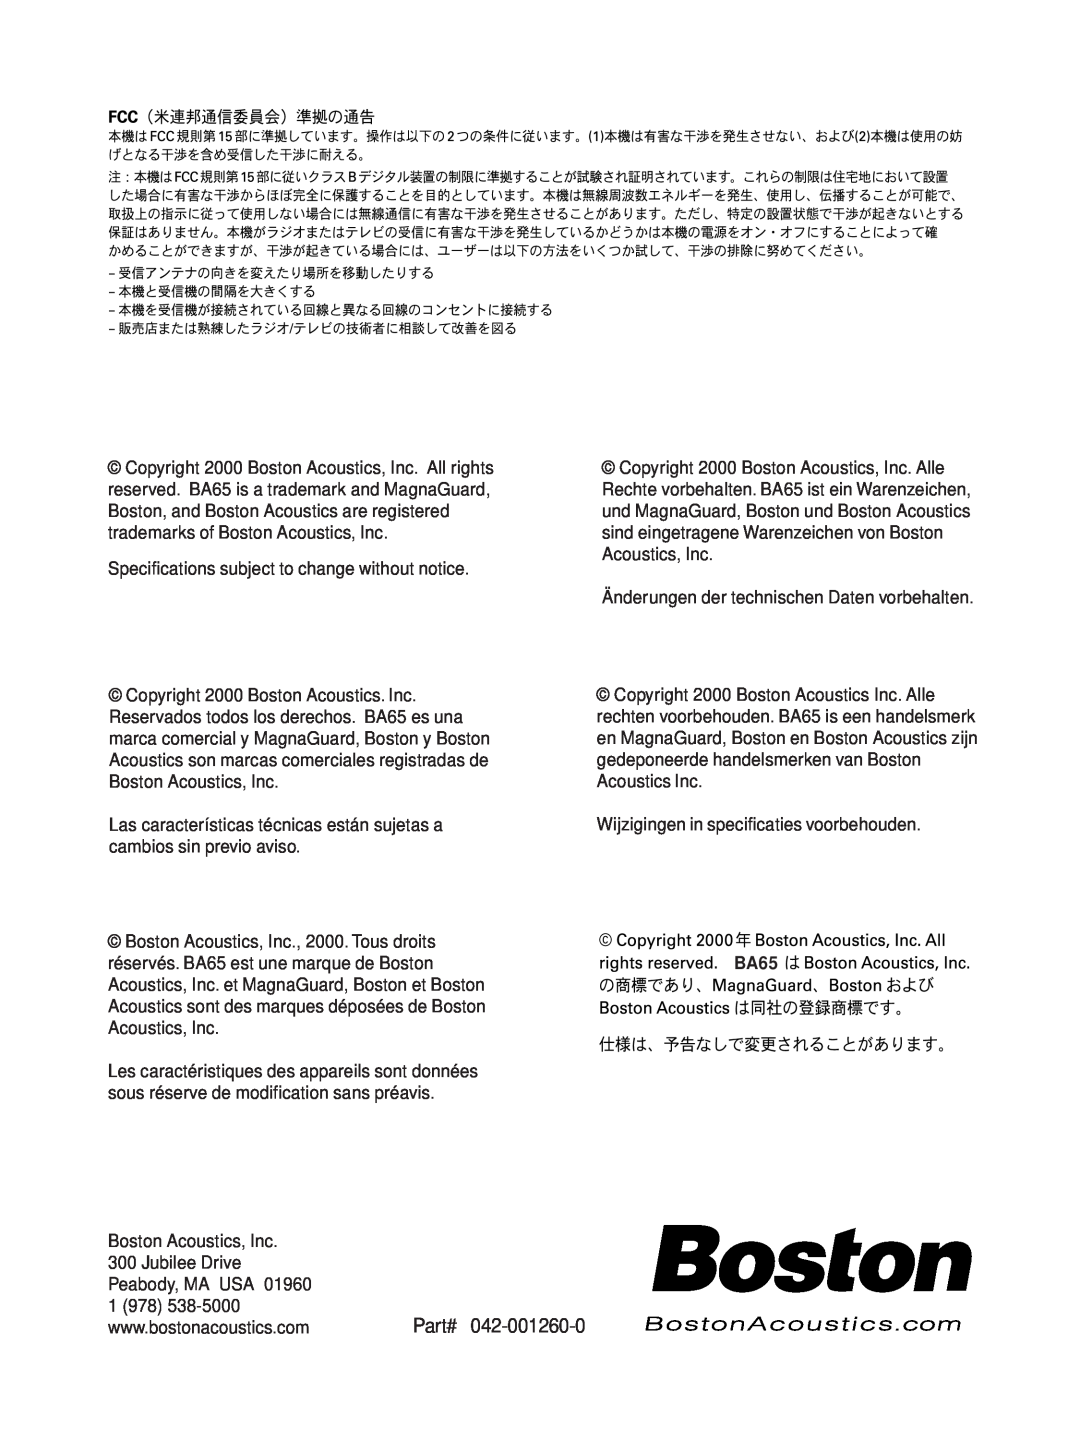 Boston Acoustics manual BA65, Part# 